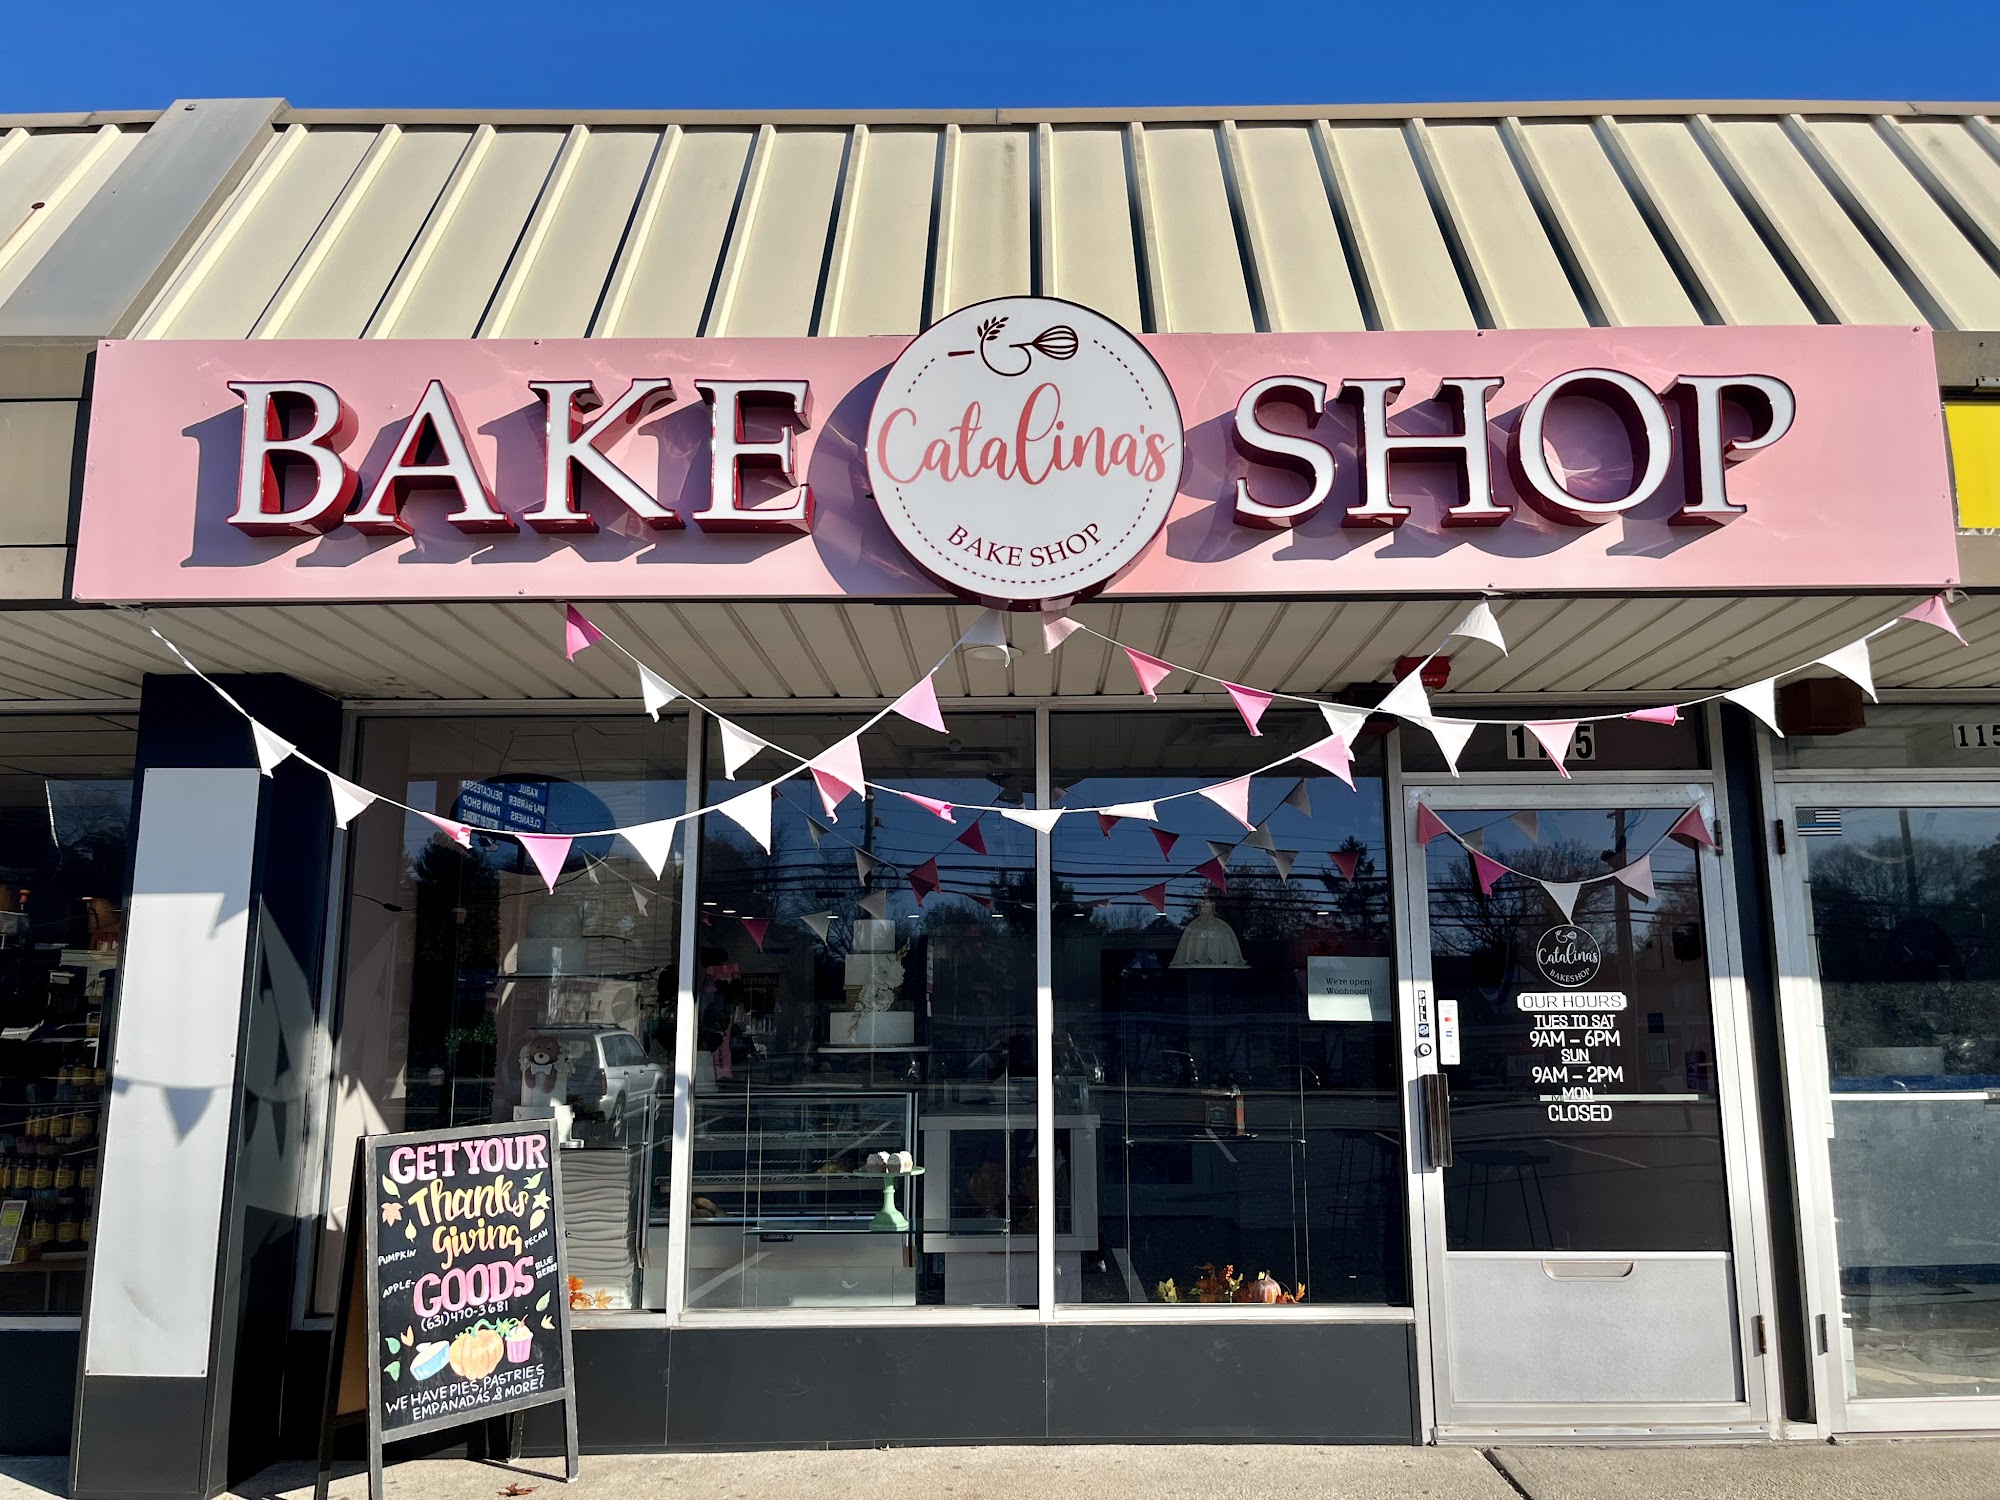 Catalina's Bake Shop